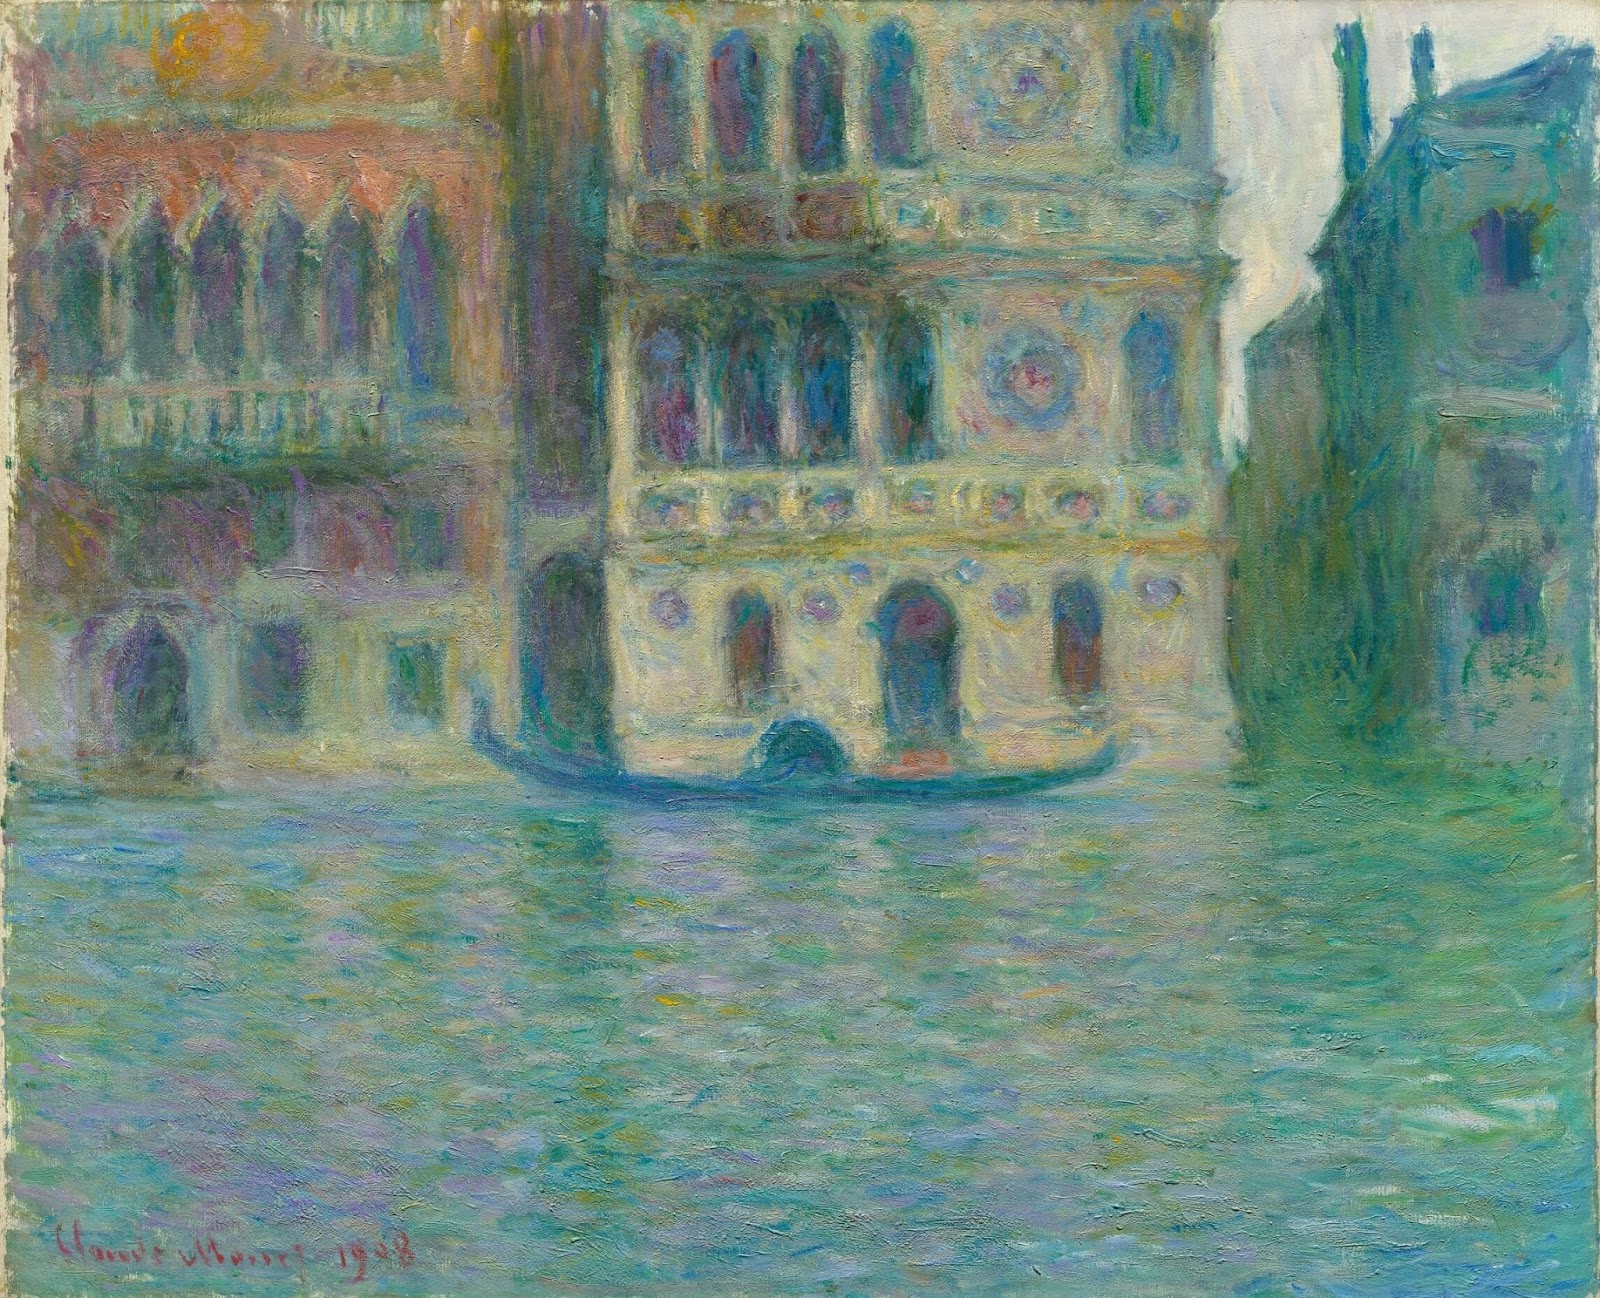 Claude+Monet-1840-1926 (561).jpg